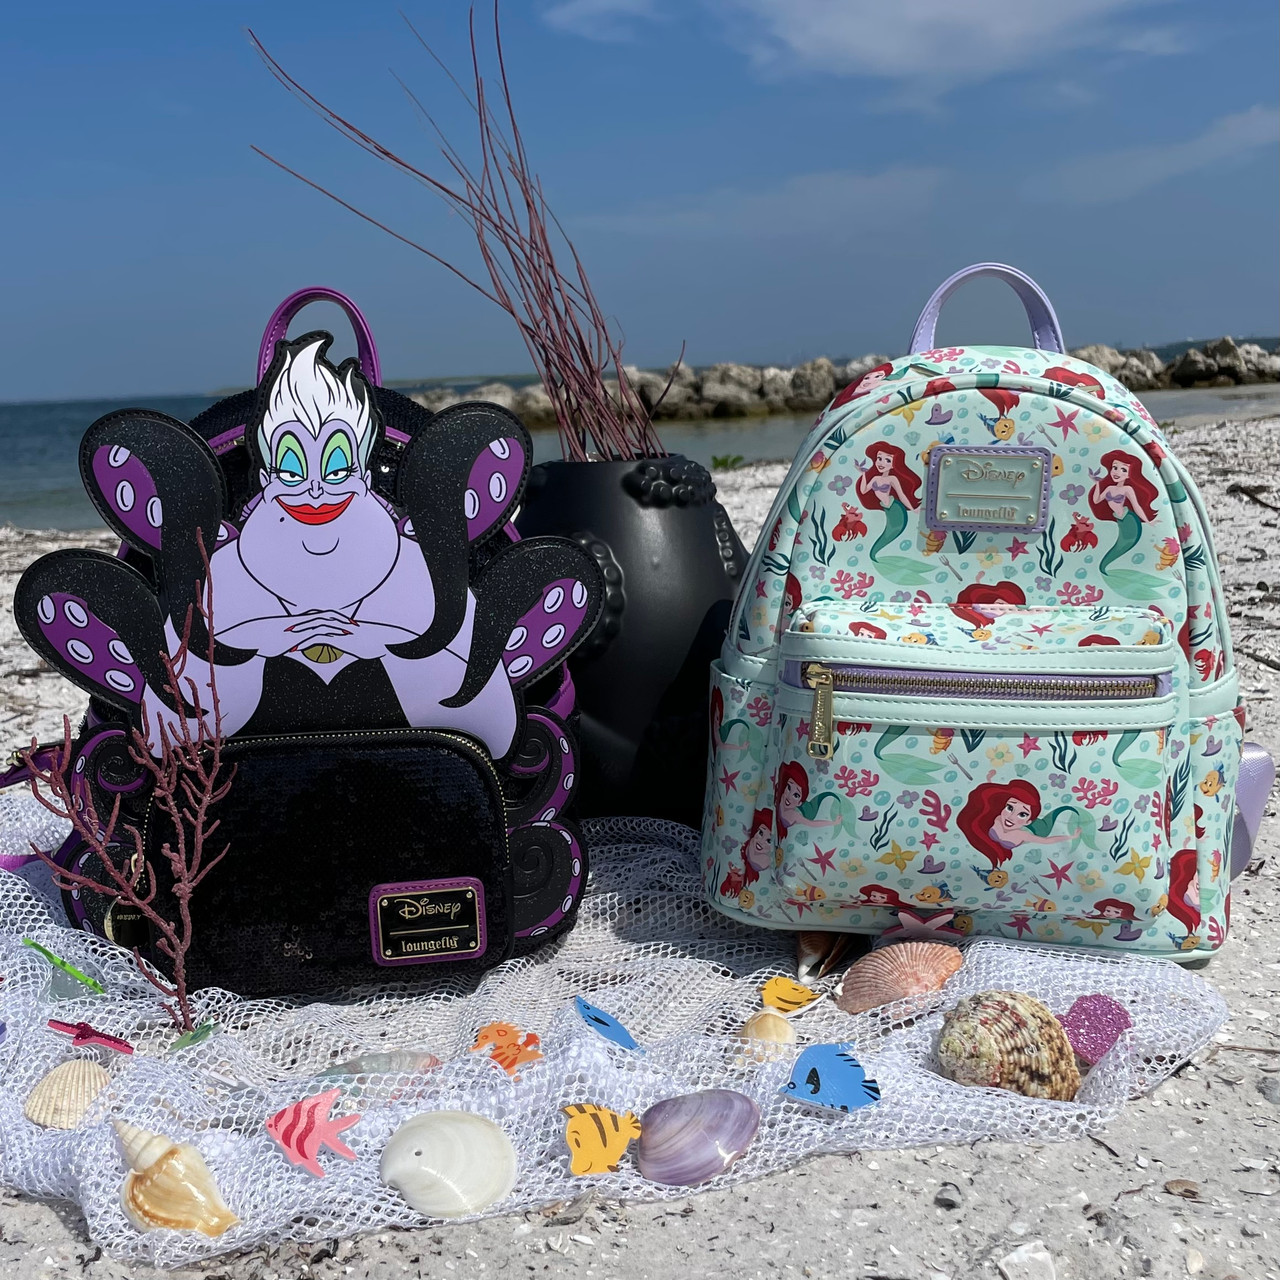 Ariel (The Little Mermaid) Disney Mini Backpack Keychain